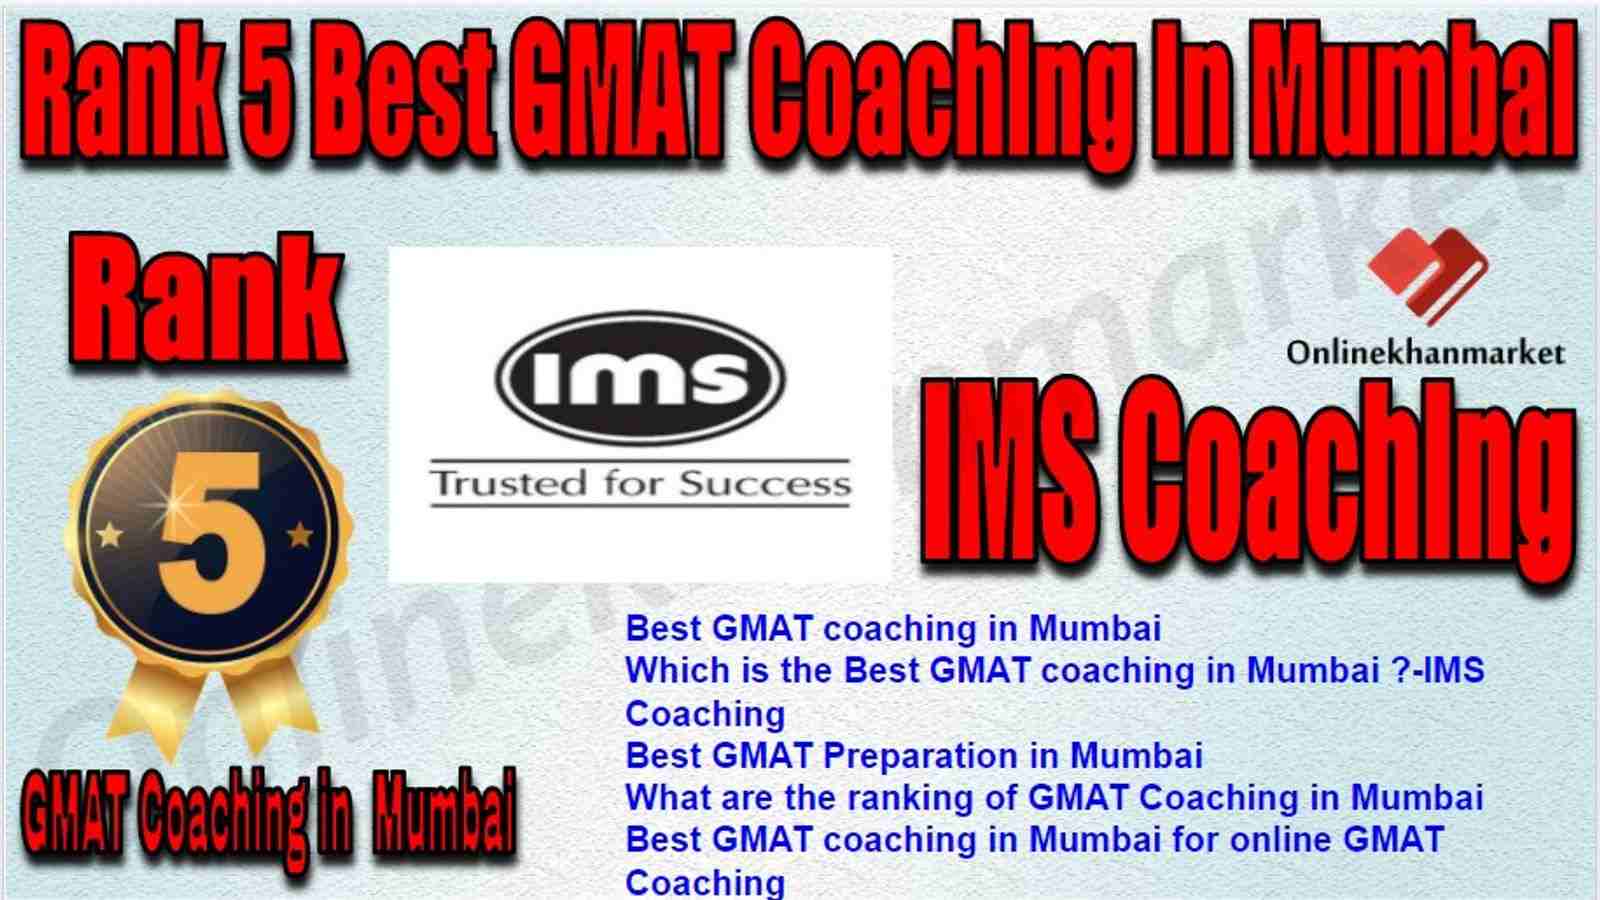 Rank 5 Best GMAT Coaching in Mumbai